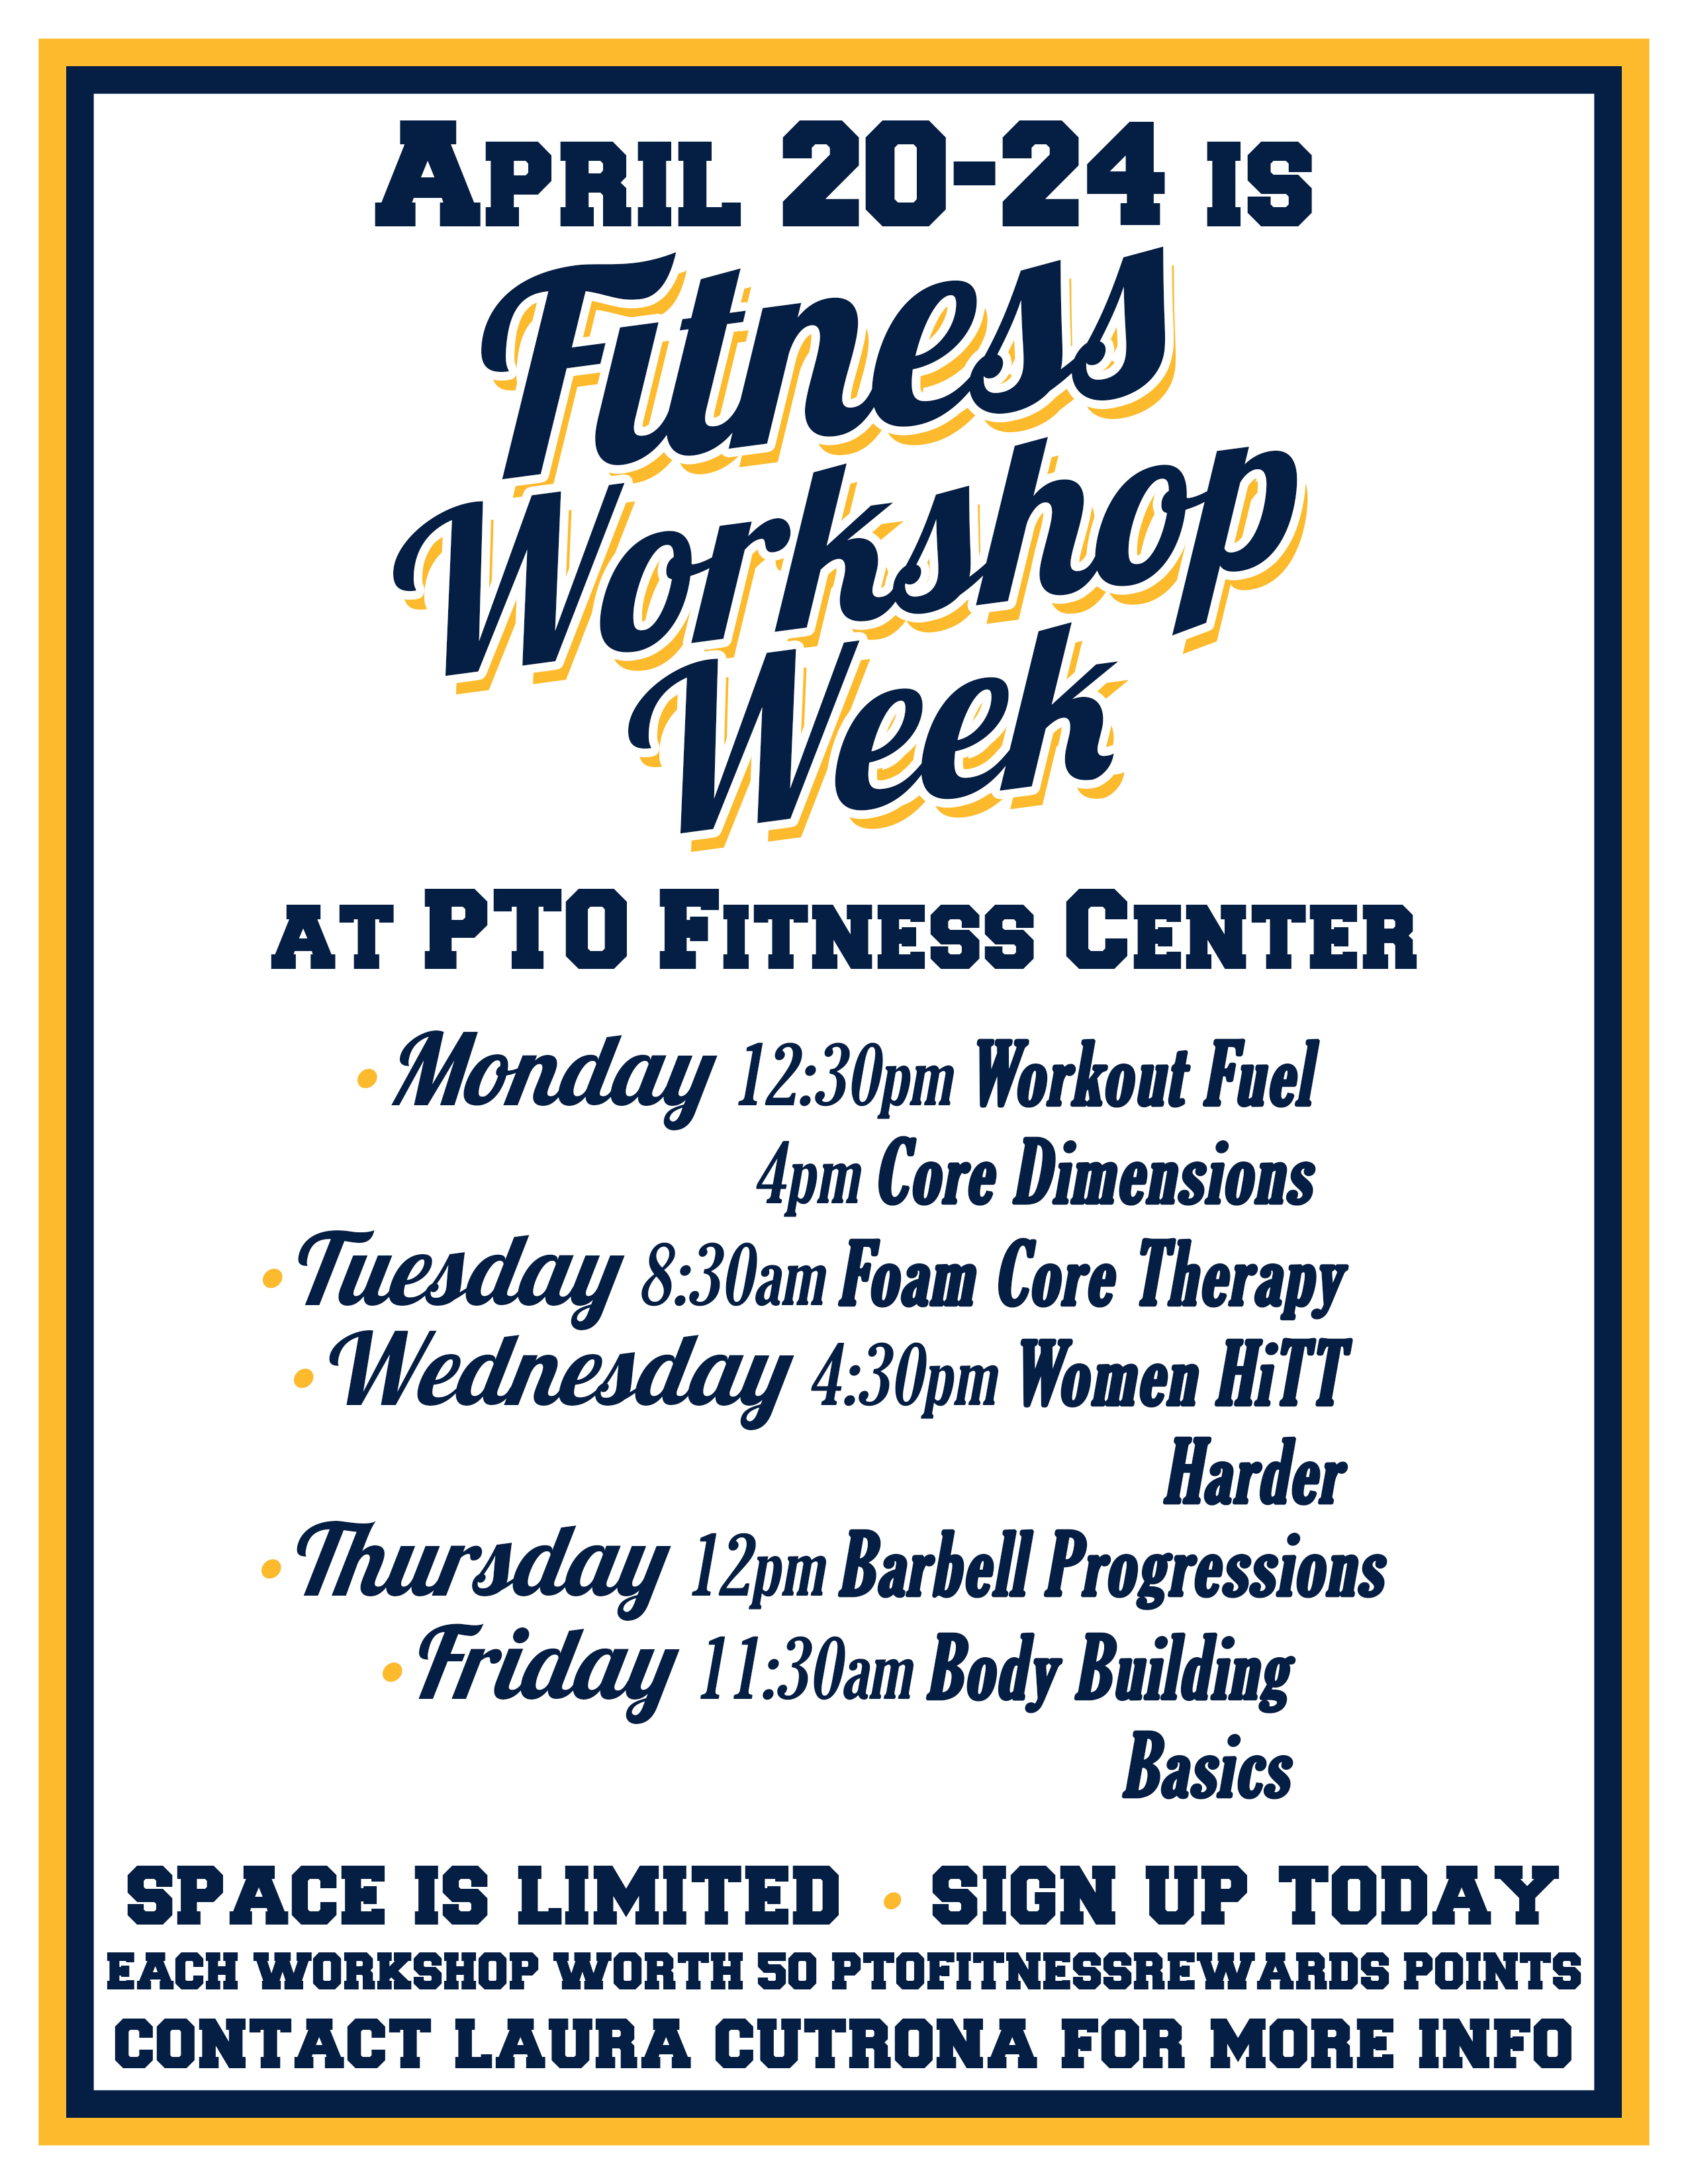 Fitness Week PTO Fitness Center